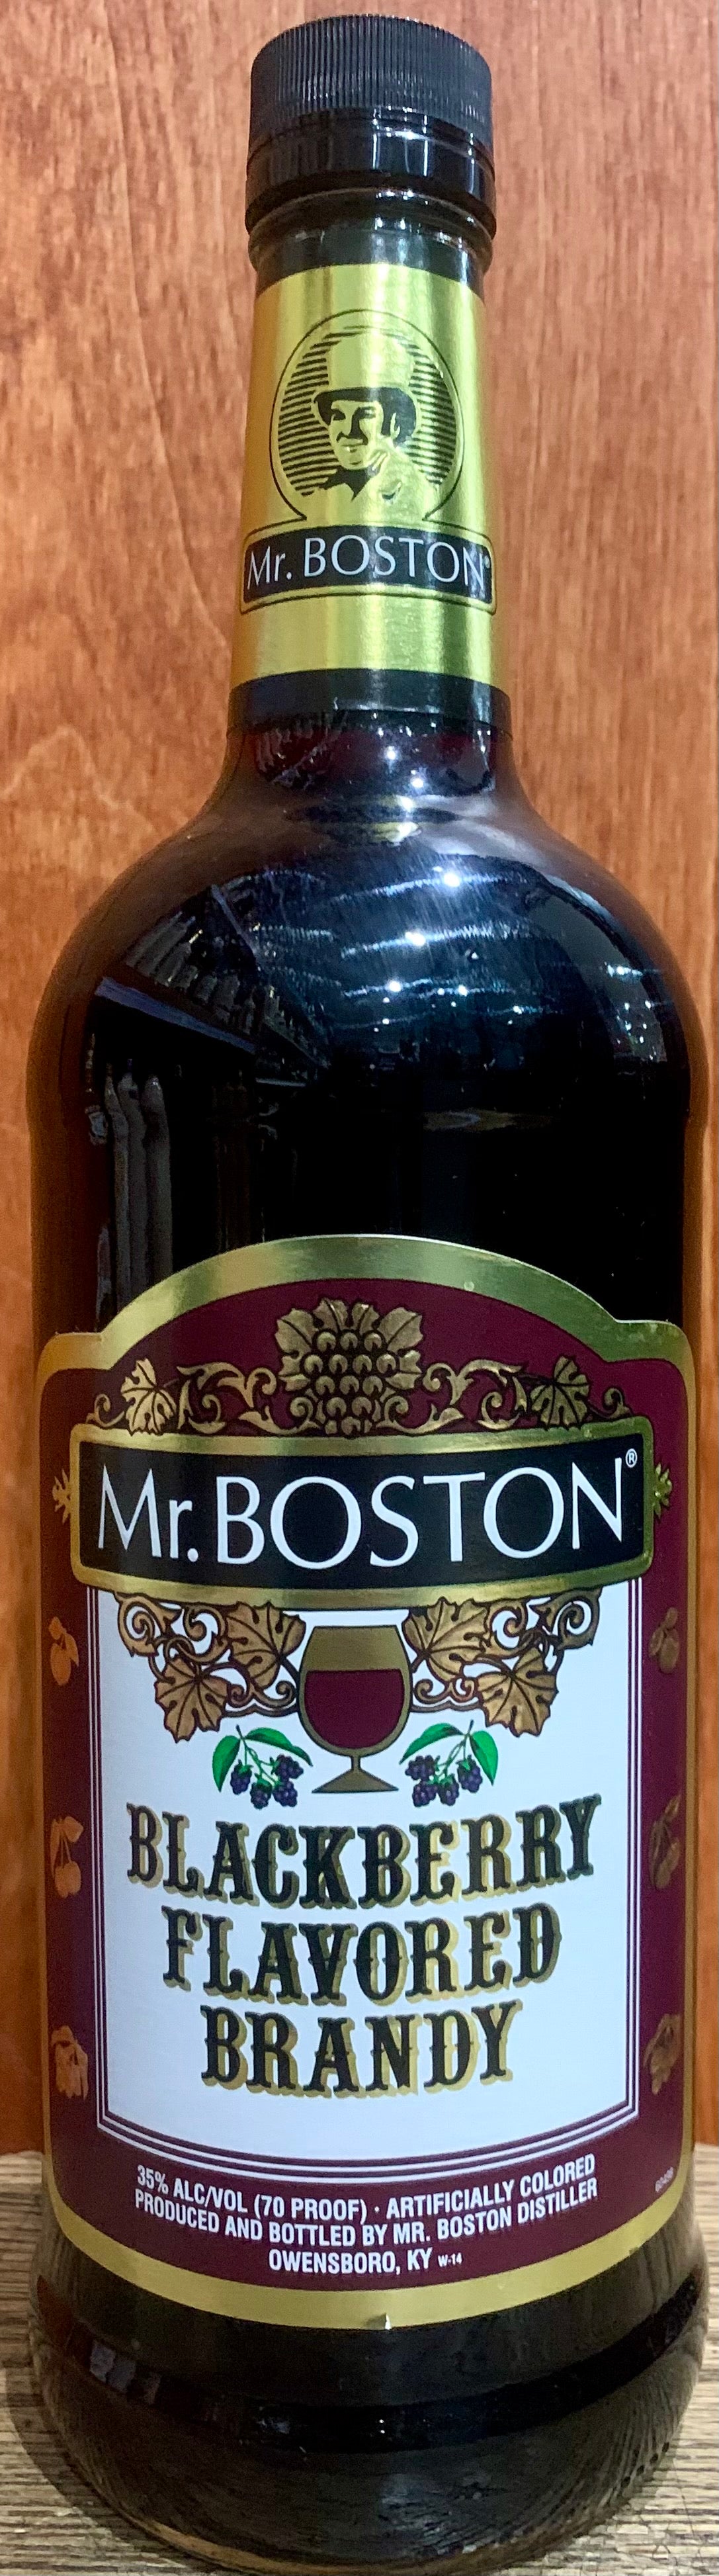 MR. BOSTON BLACKBERRY BRANDY - Bk Wine Depot Corp